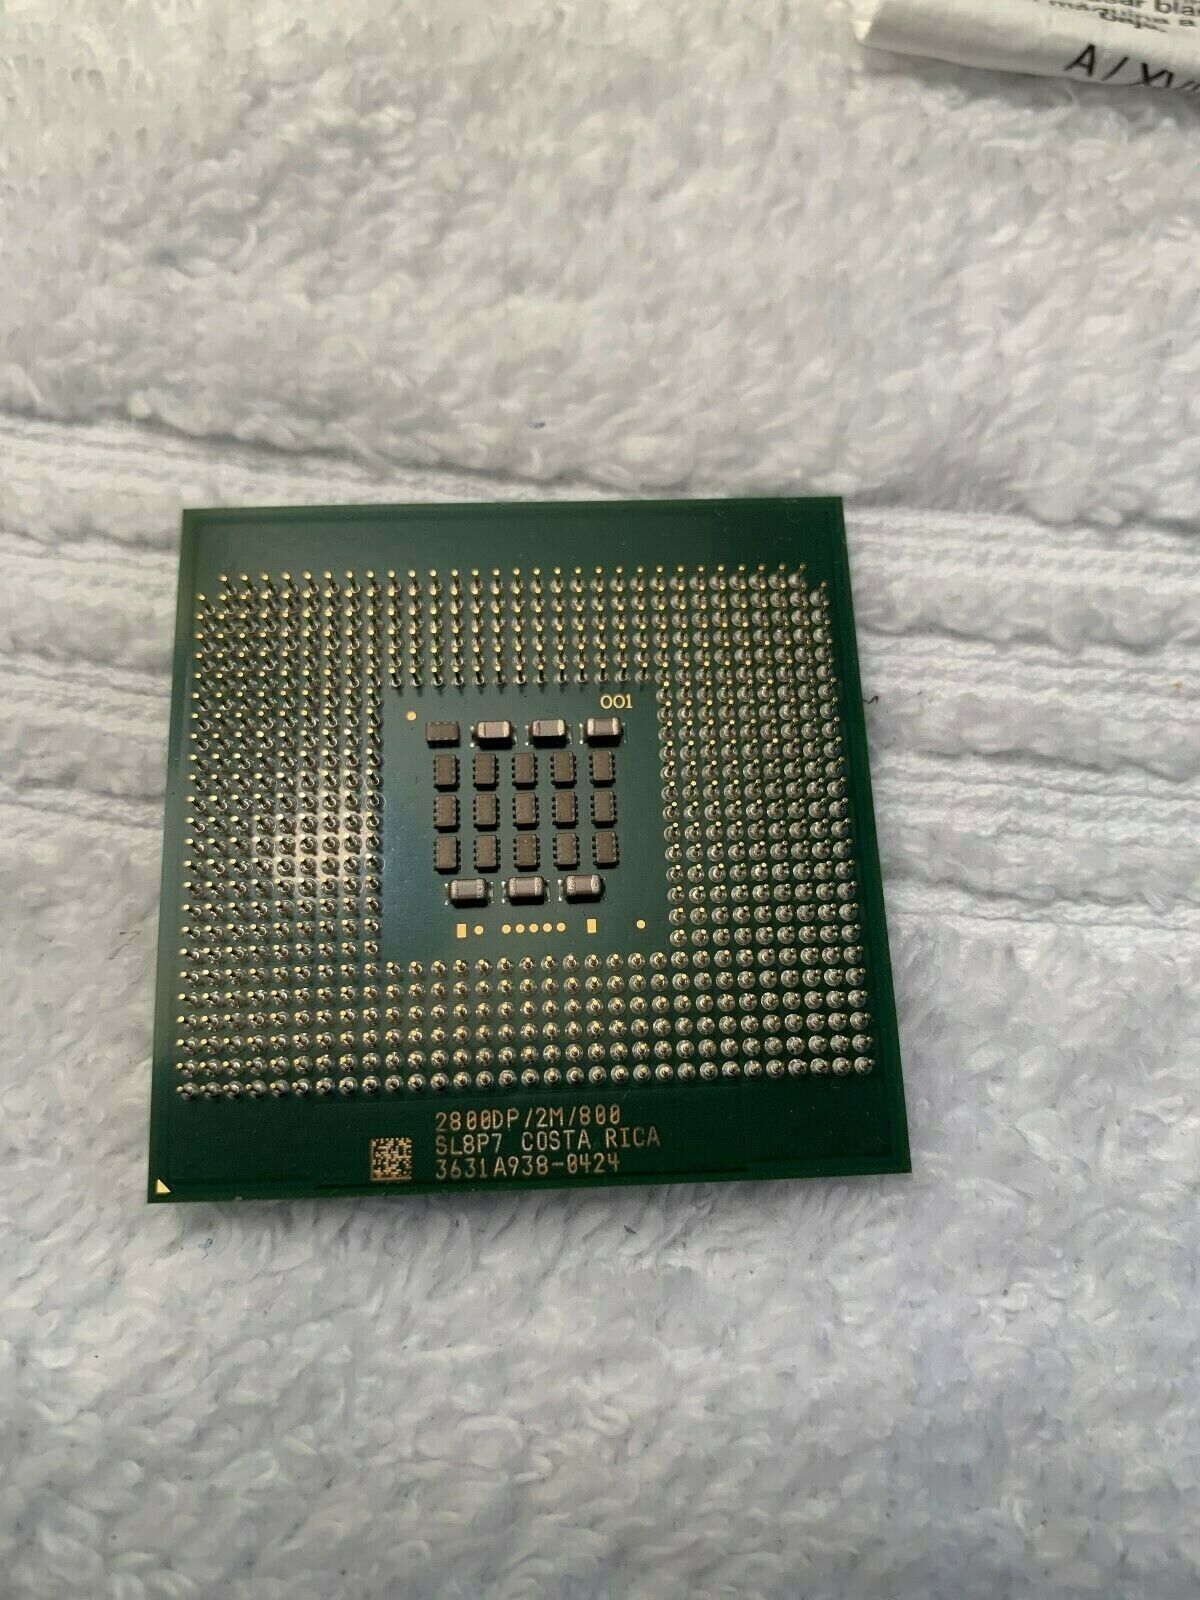 Intel Xeon DP 2.8/2M/800MHz SL8P7 Processor CPU